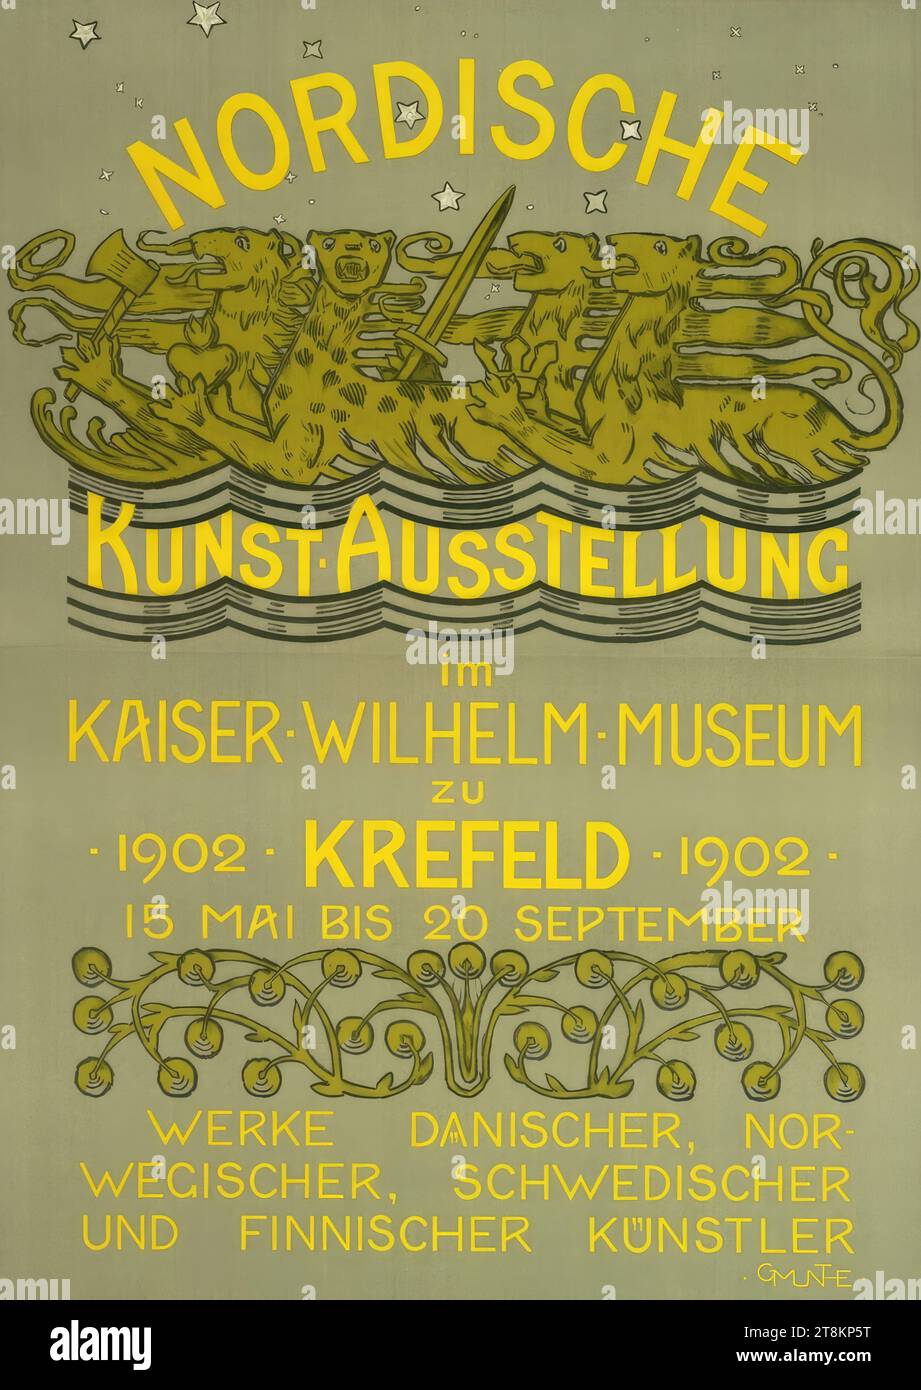 NORDIC ART EXHIBITION in the KAISER WILHELM MUSEUM; 1902, KREFELD, Gerhard M. Munthe, Düsseldorf 1875 - 1927 Leiden, 1902, print, color lithograph, sheet: 1220 mm x 890 mm Stock Photo